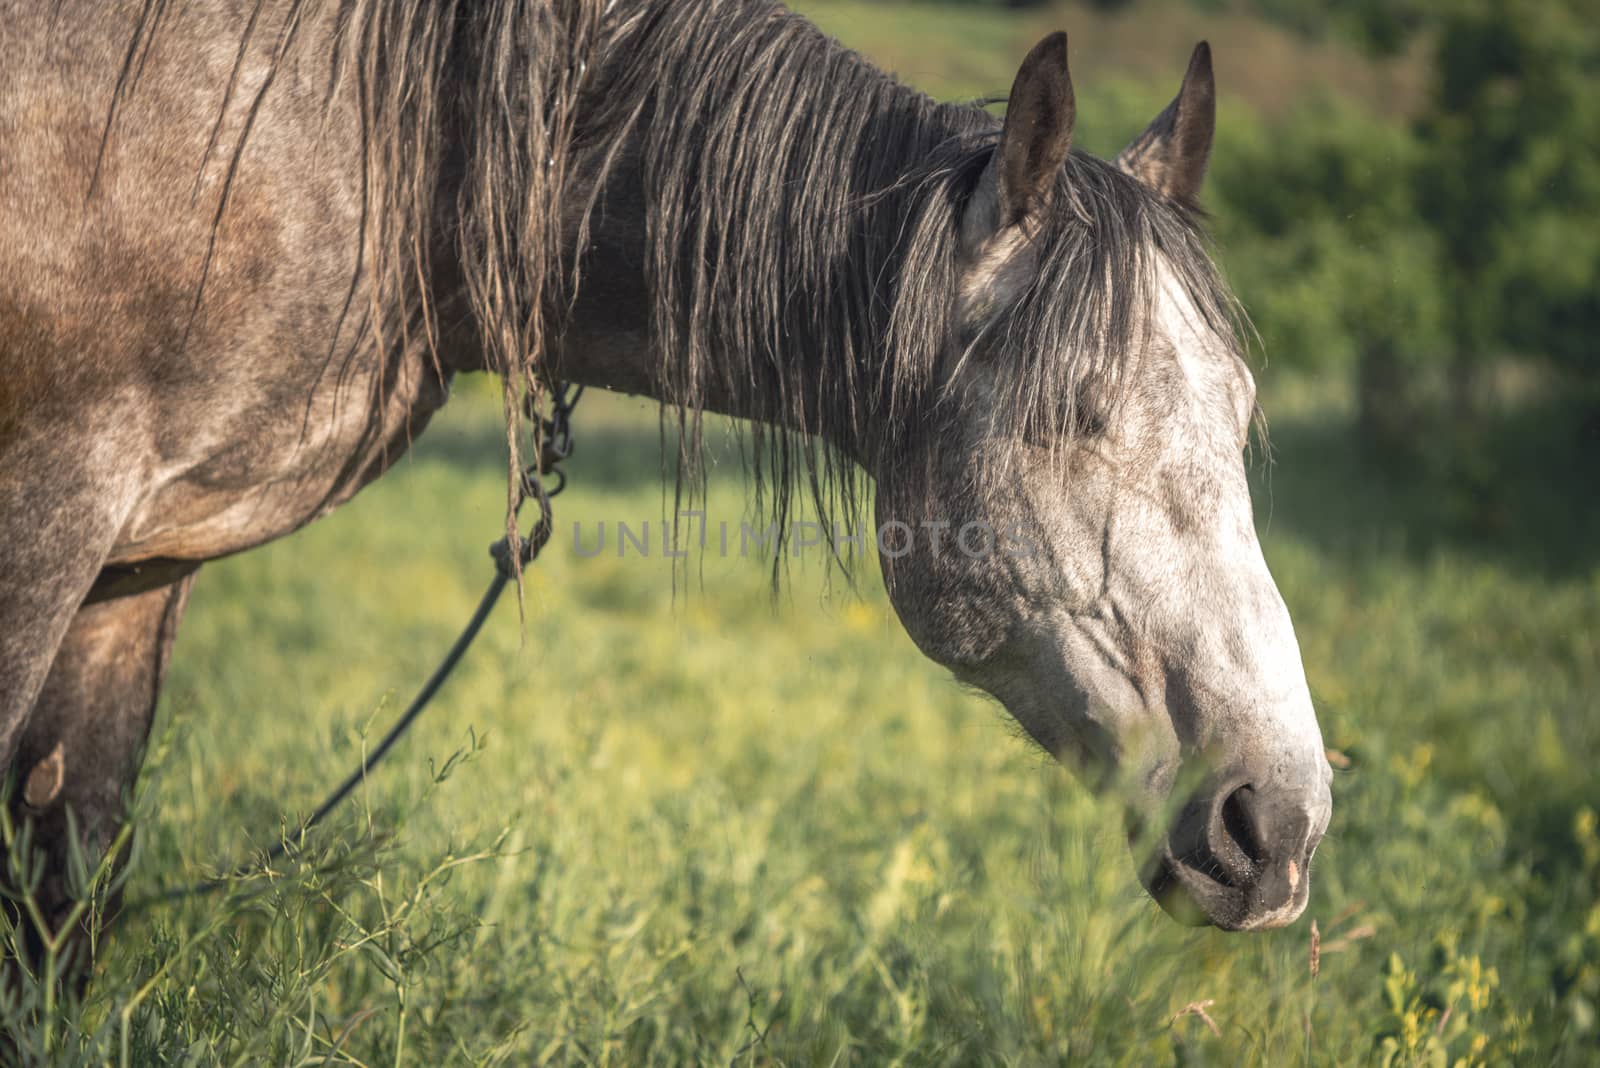 Grey horse in the green field by Deniskarpenkov